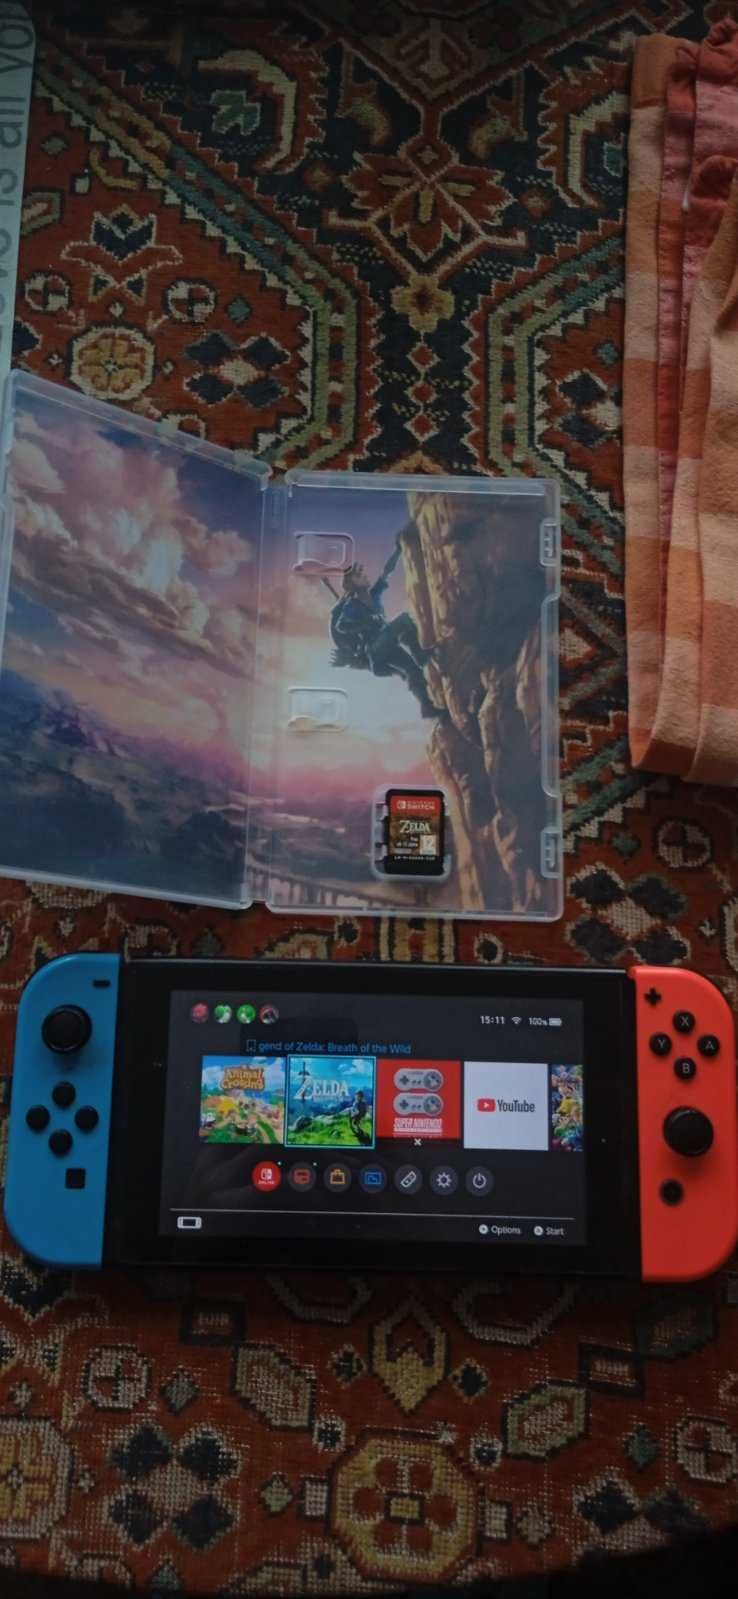 Nintendo Switch + The legend of Zelda: Breath of the wild